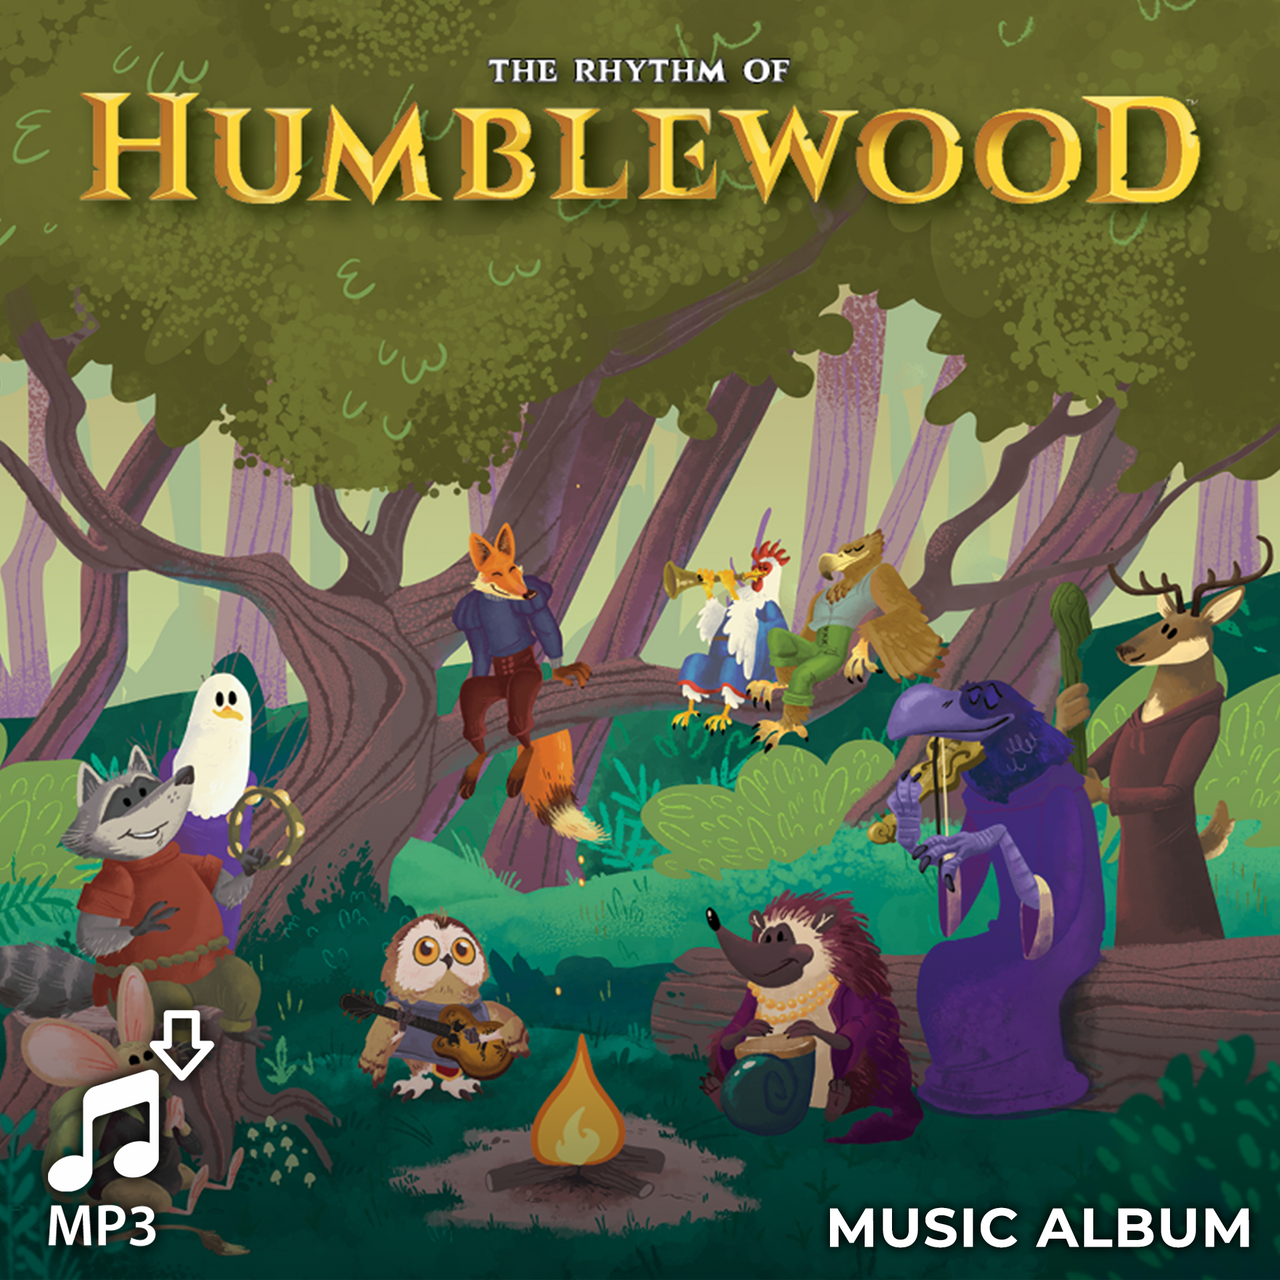 The Rhythm of Humblewood - Music Album + Streaming License (MP3)